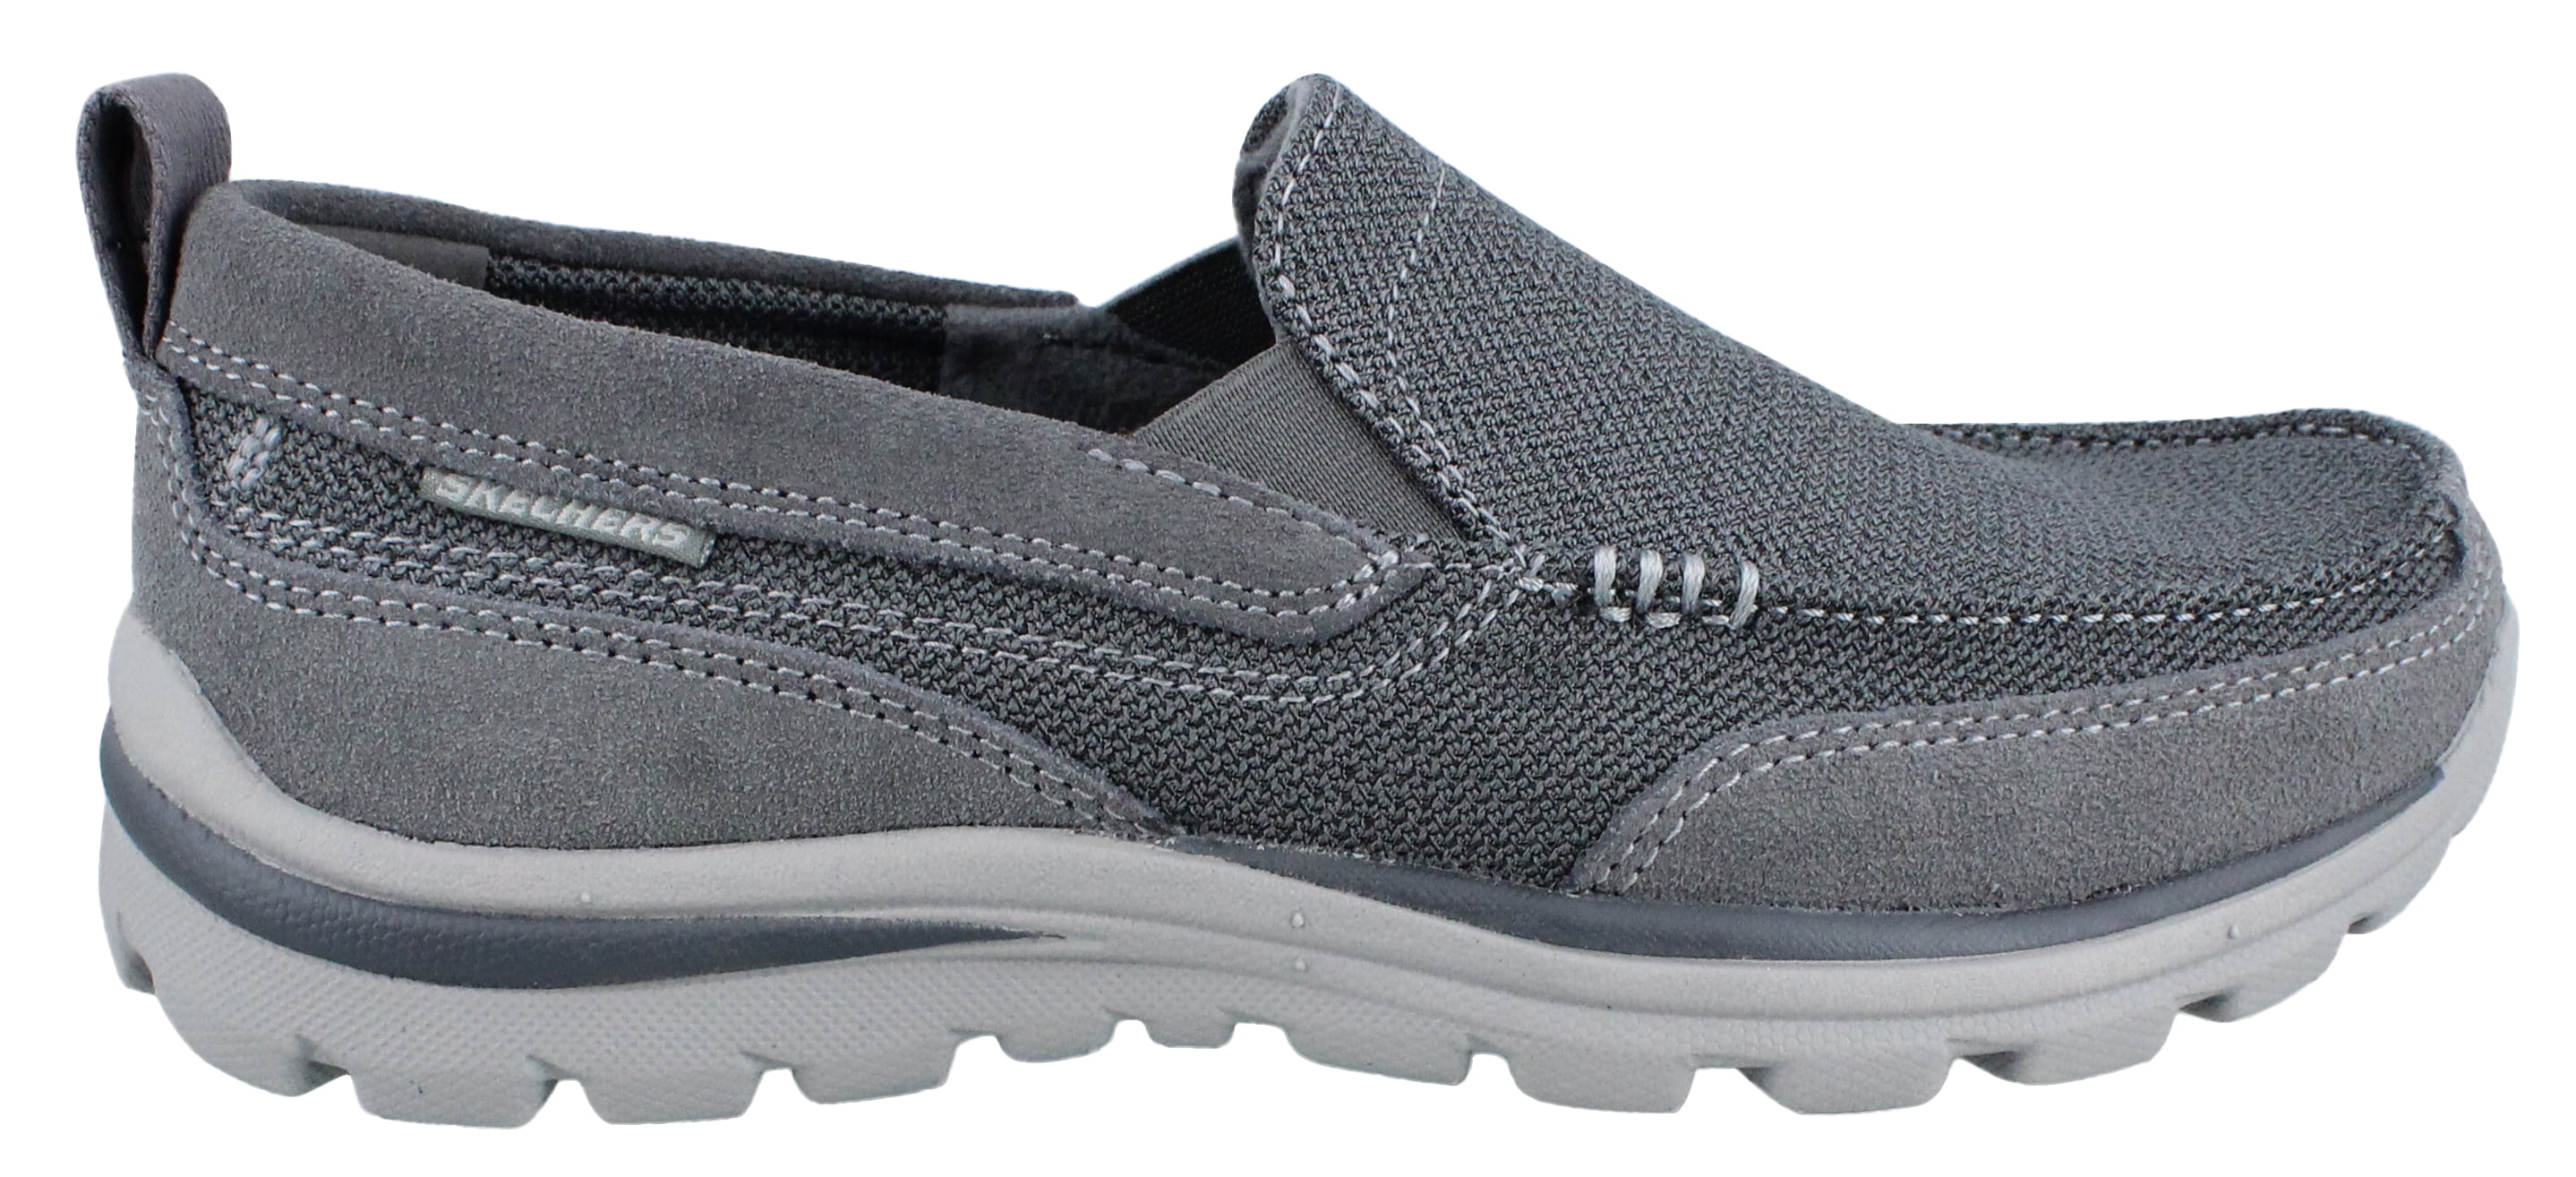 Skechers Relaxed Fit Superior Milford Slip-On Sneaker (Men's) - Walmart.com